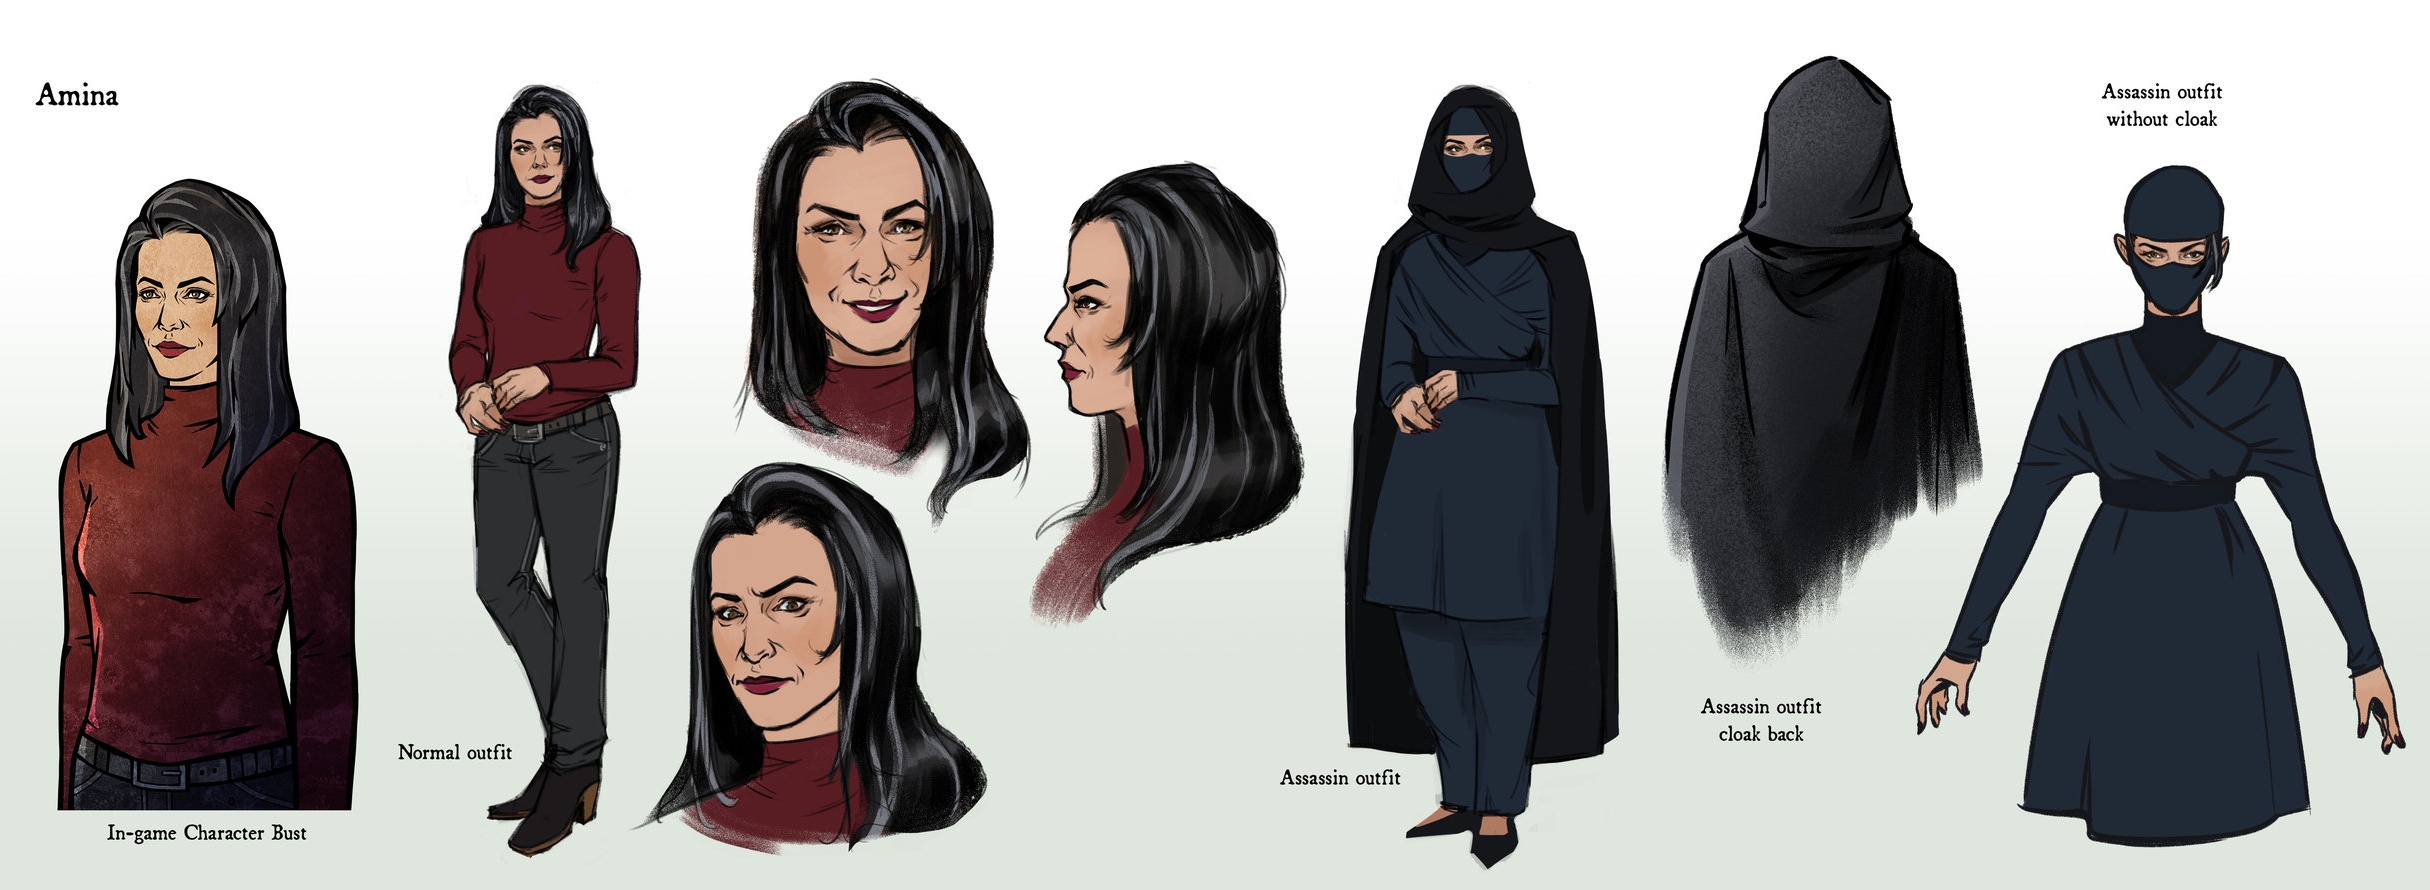 Amina character design.jpg